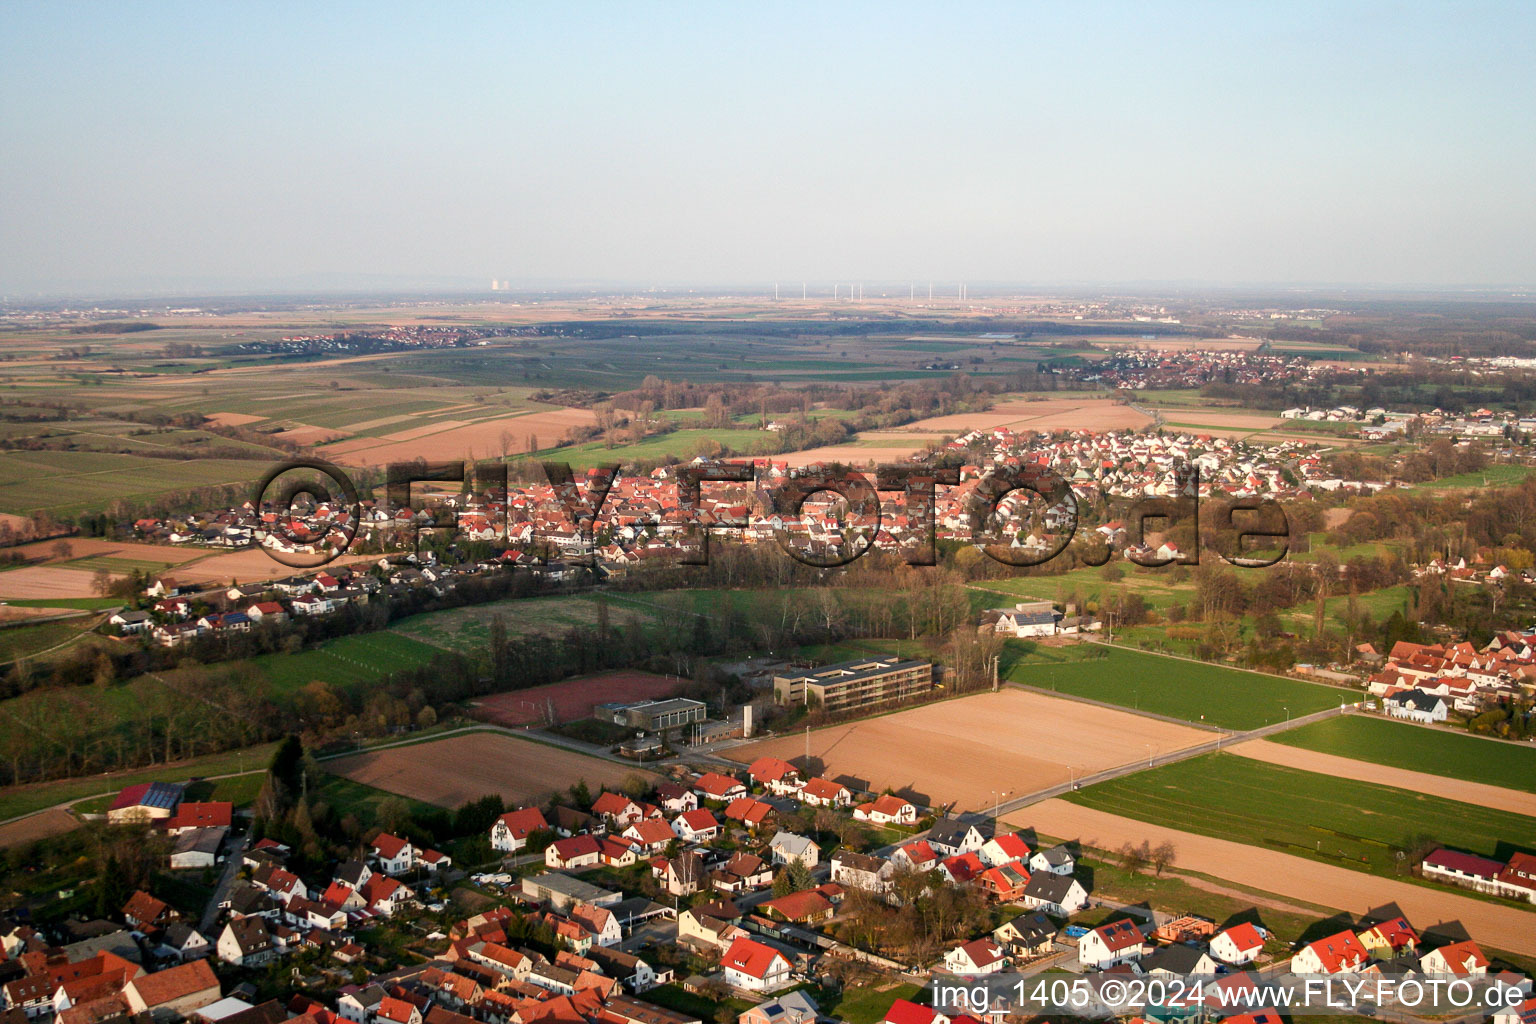 District Ingenheim in Billigheim-Ingenheim in the state Rhineland-Palatinate, Germany from the plane